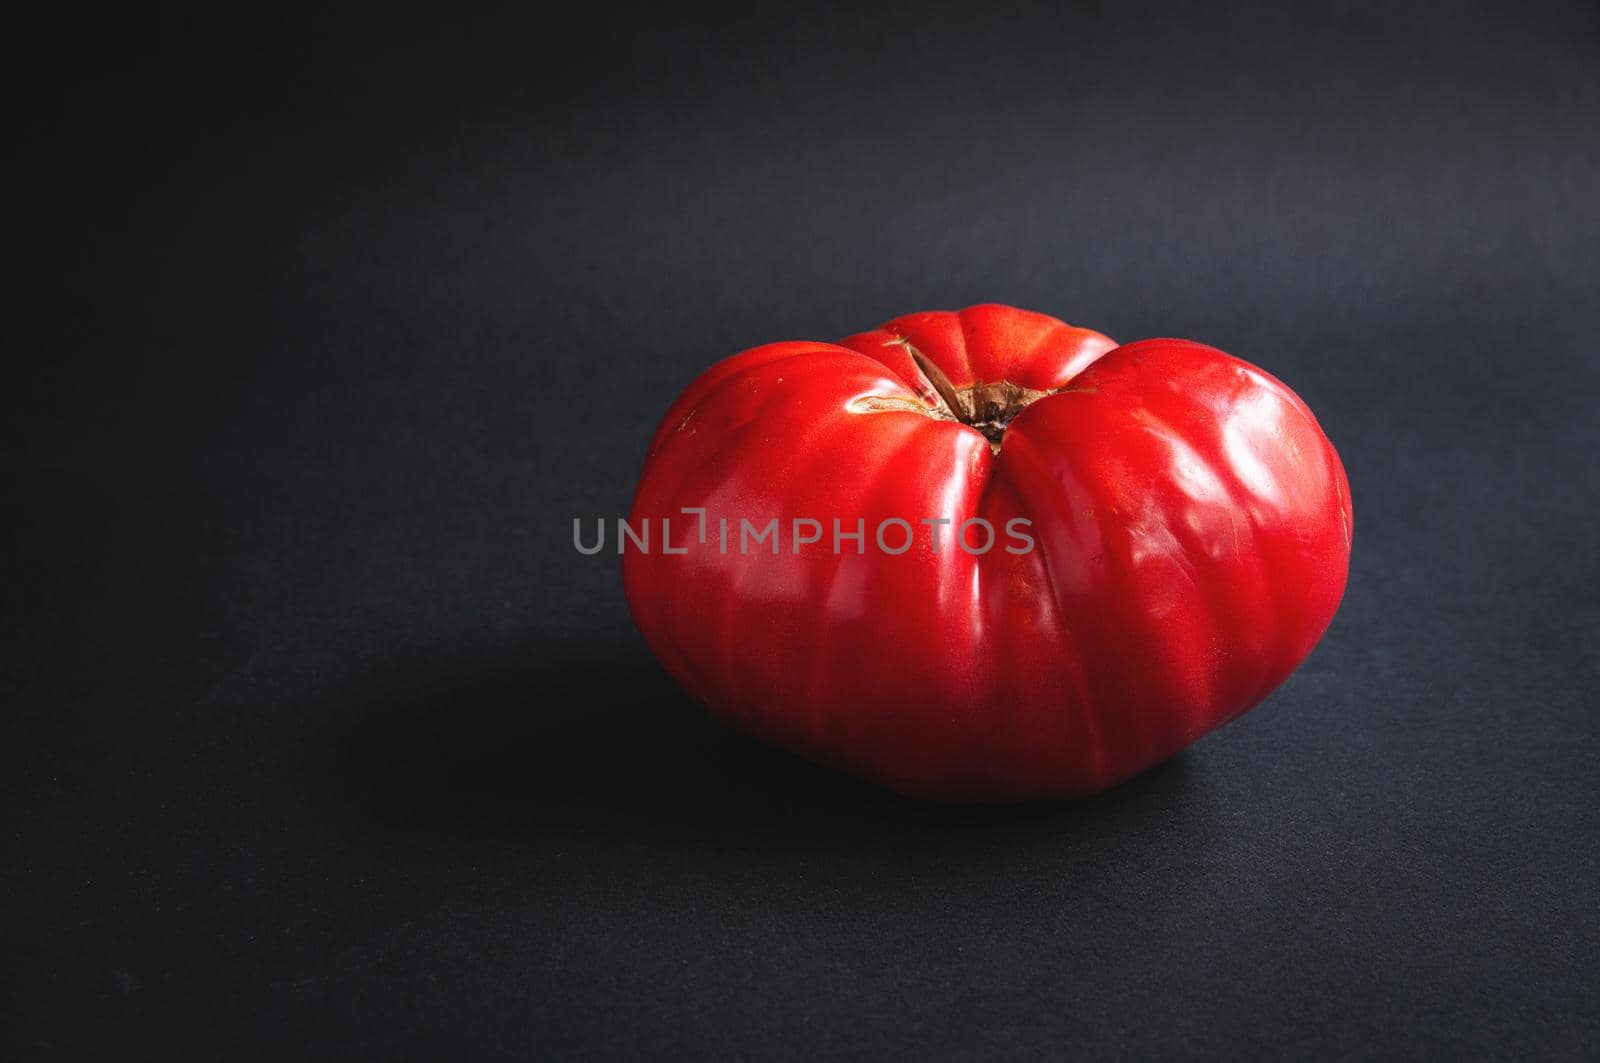 Huge big red tomato on a black serving board on a dark background